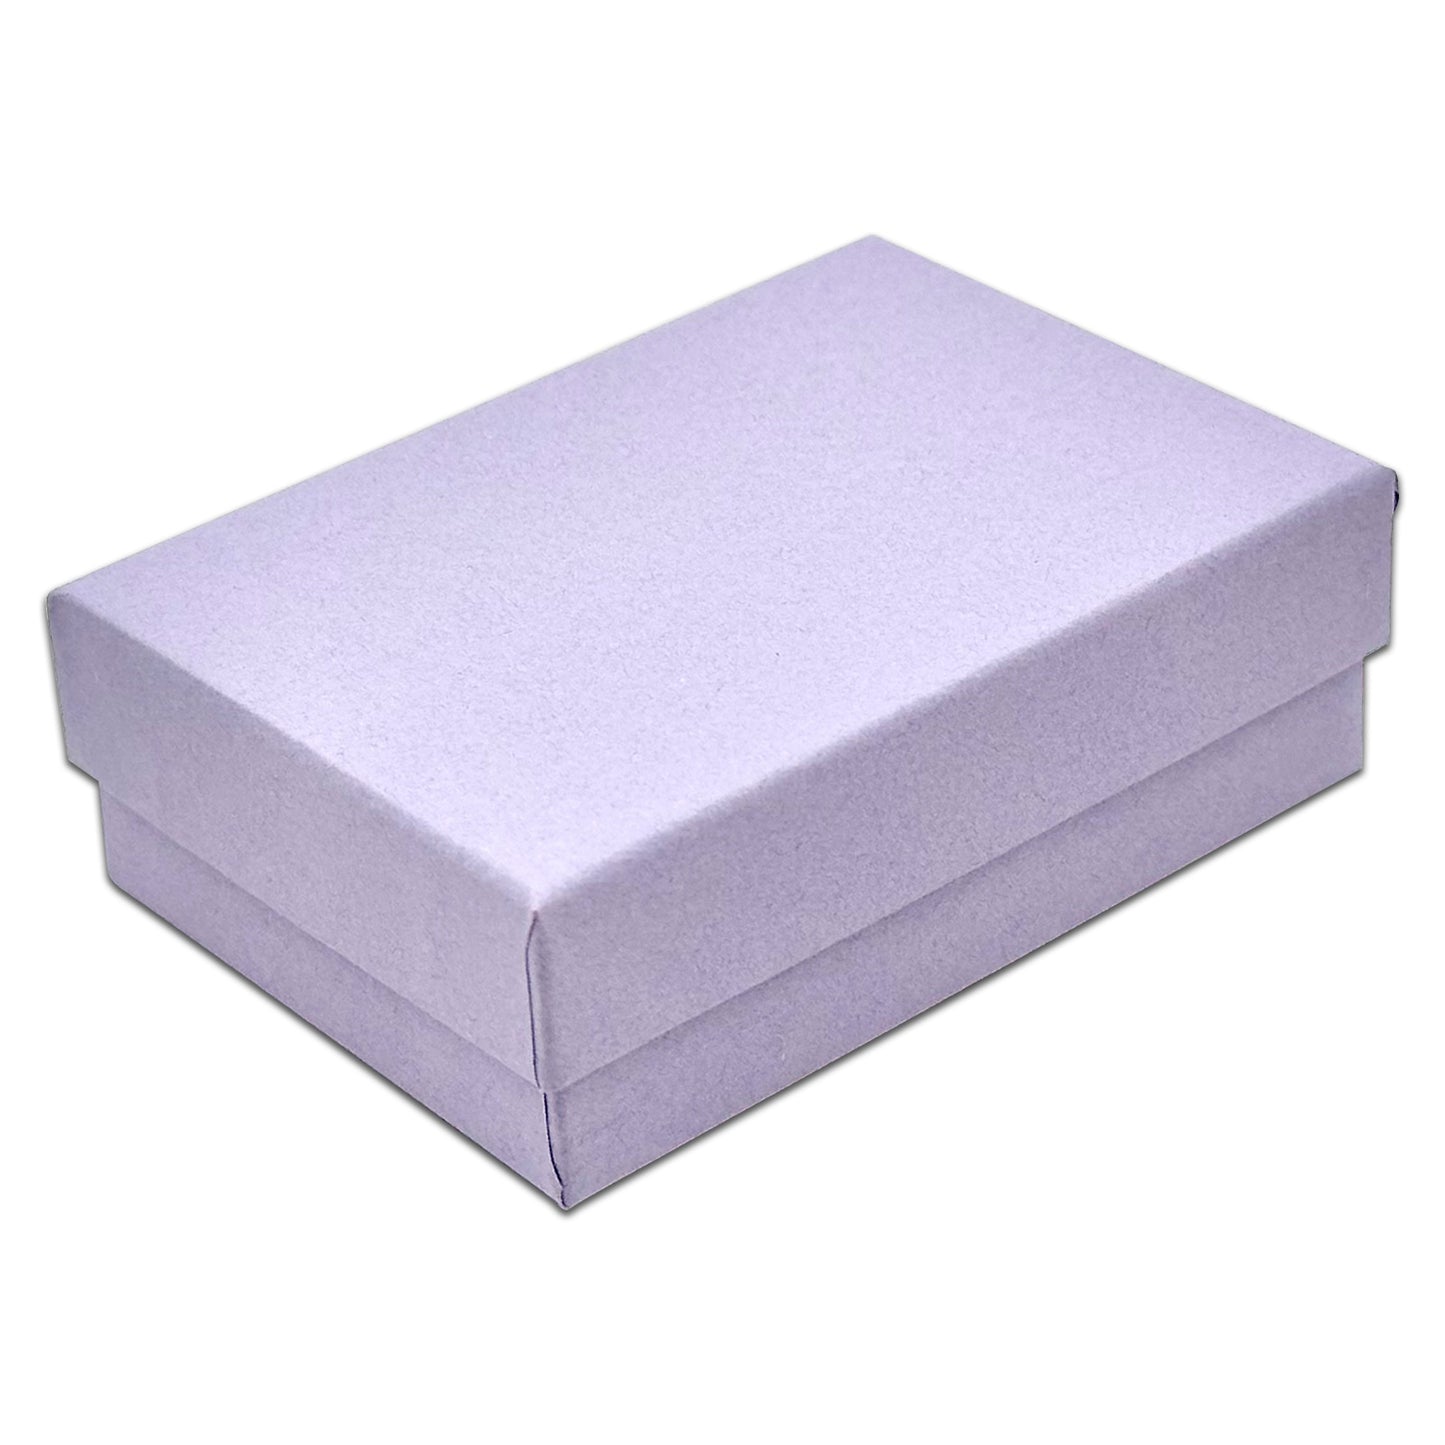 3 1/4" x 2 1/4" x 1" Light Lavender Cotton Filled Paper Box